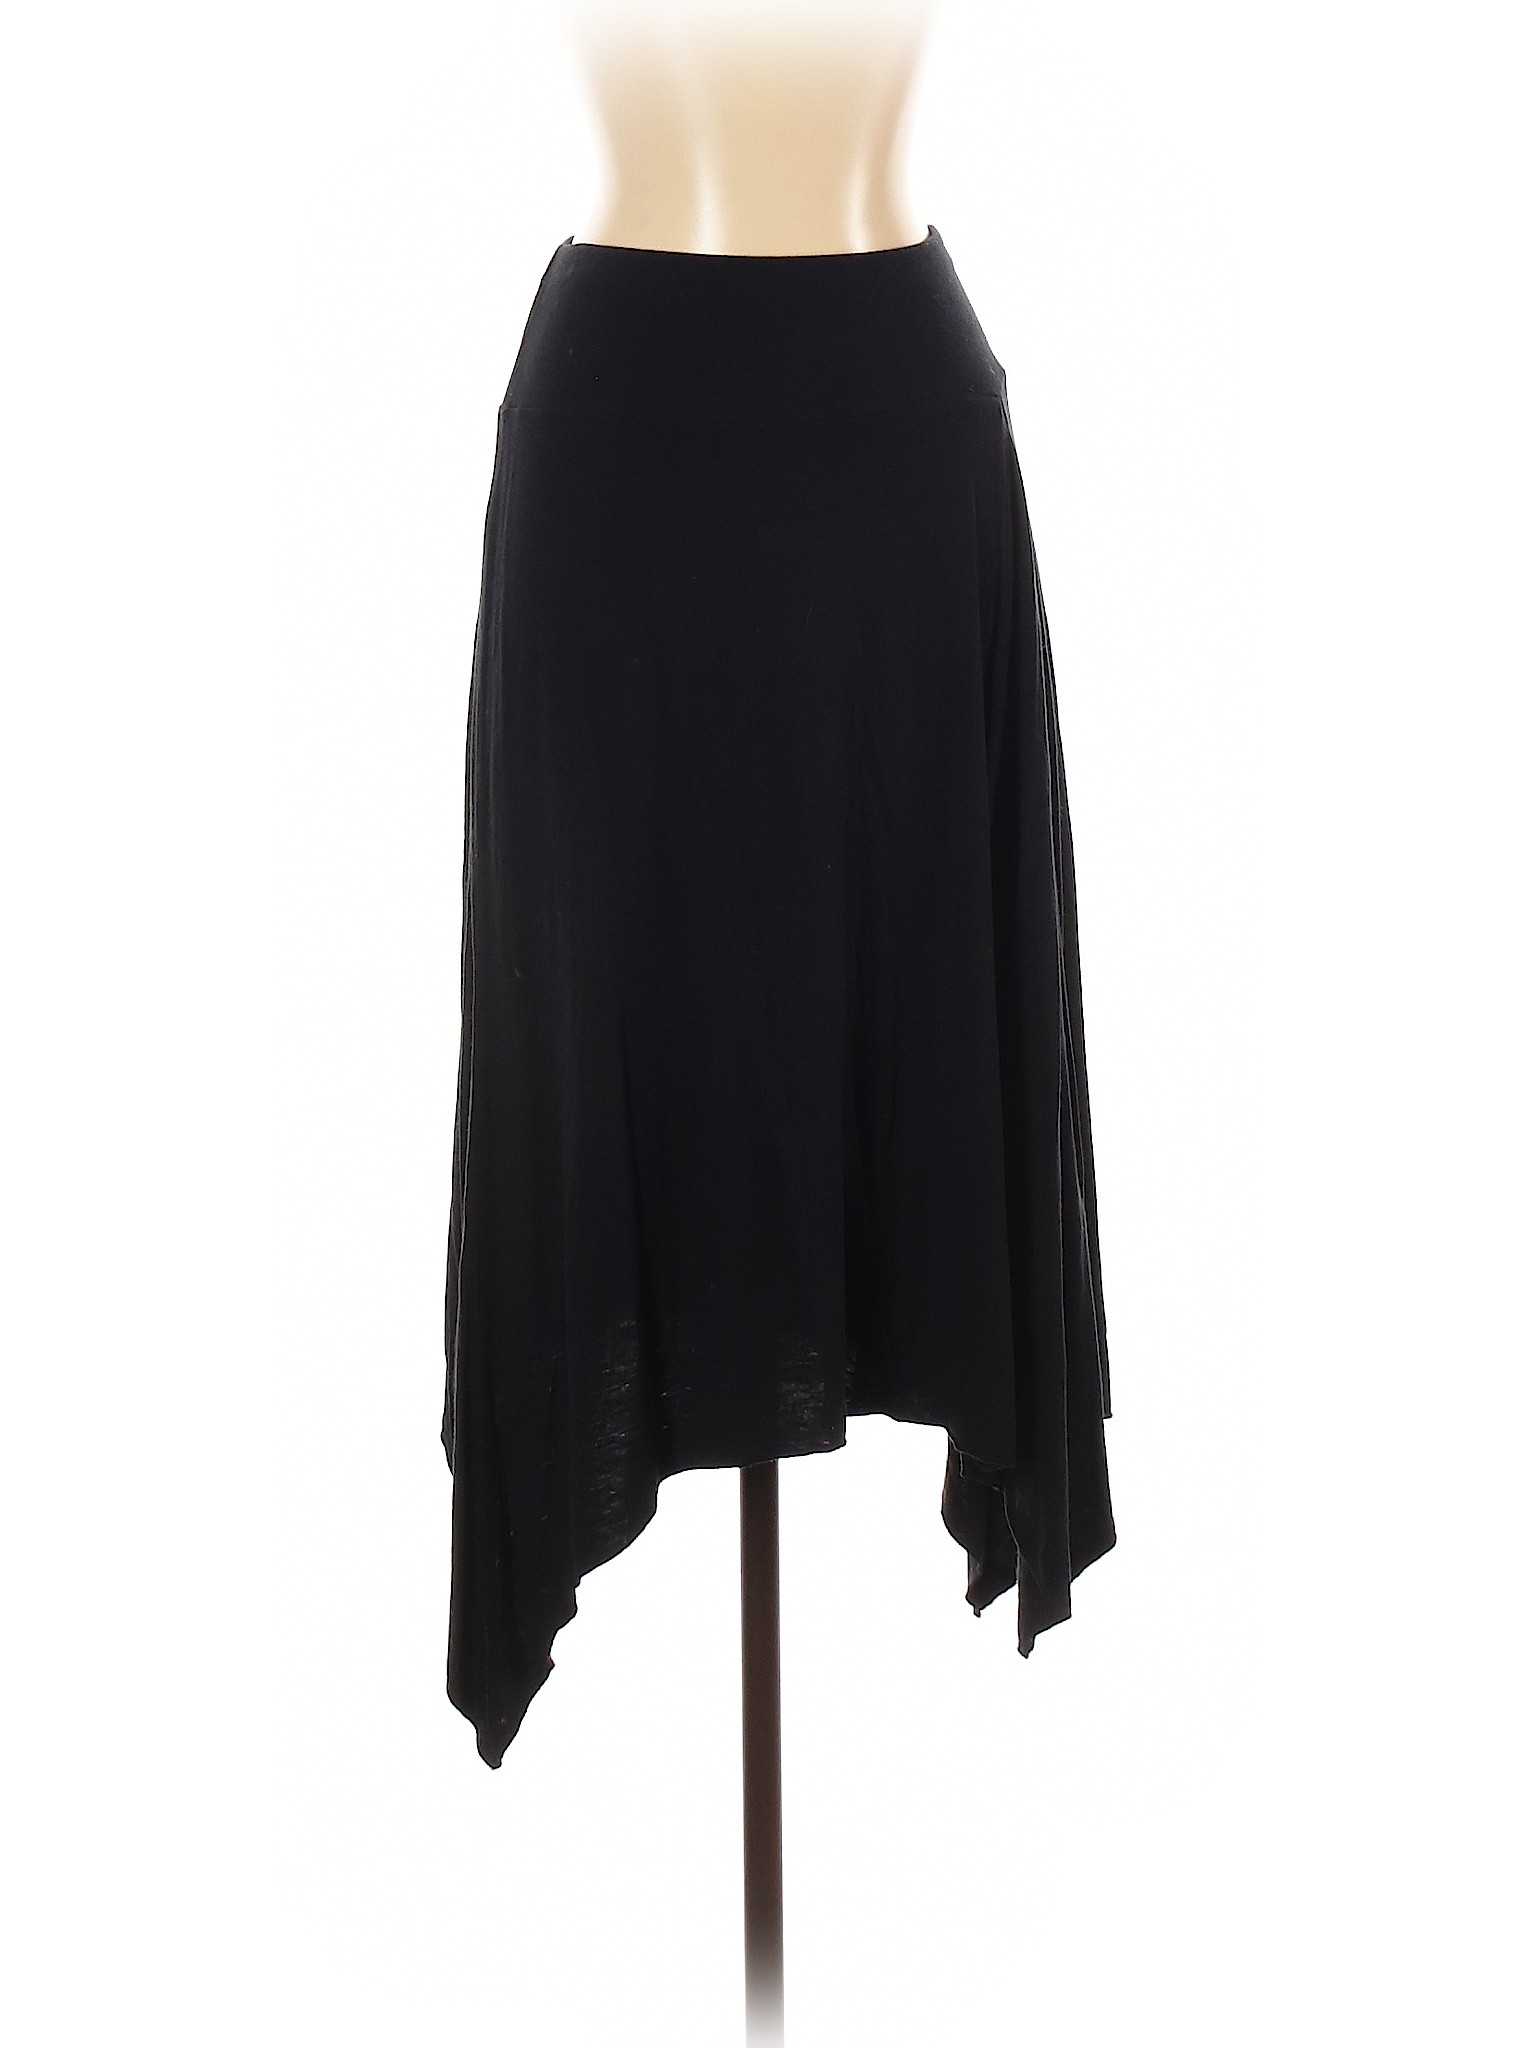 New York & Company Women Black Casual Skirt S | eBay